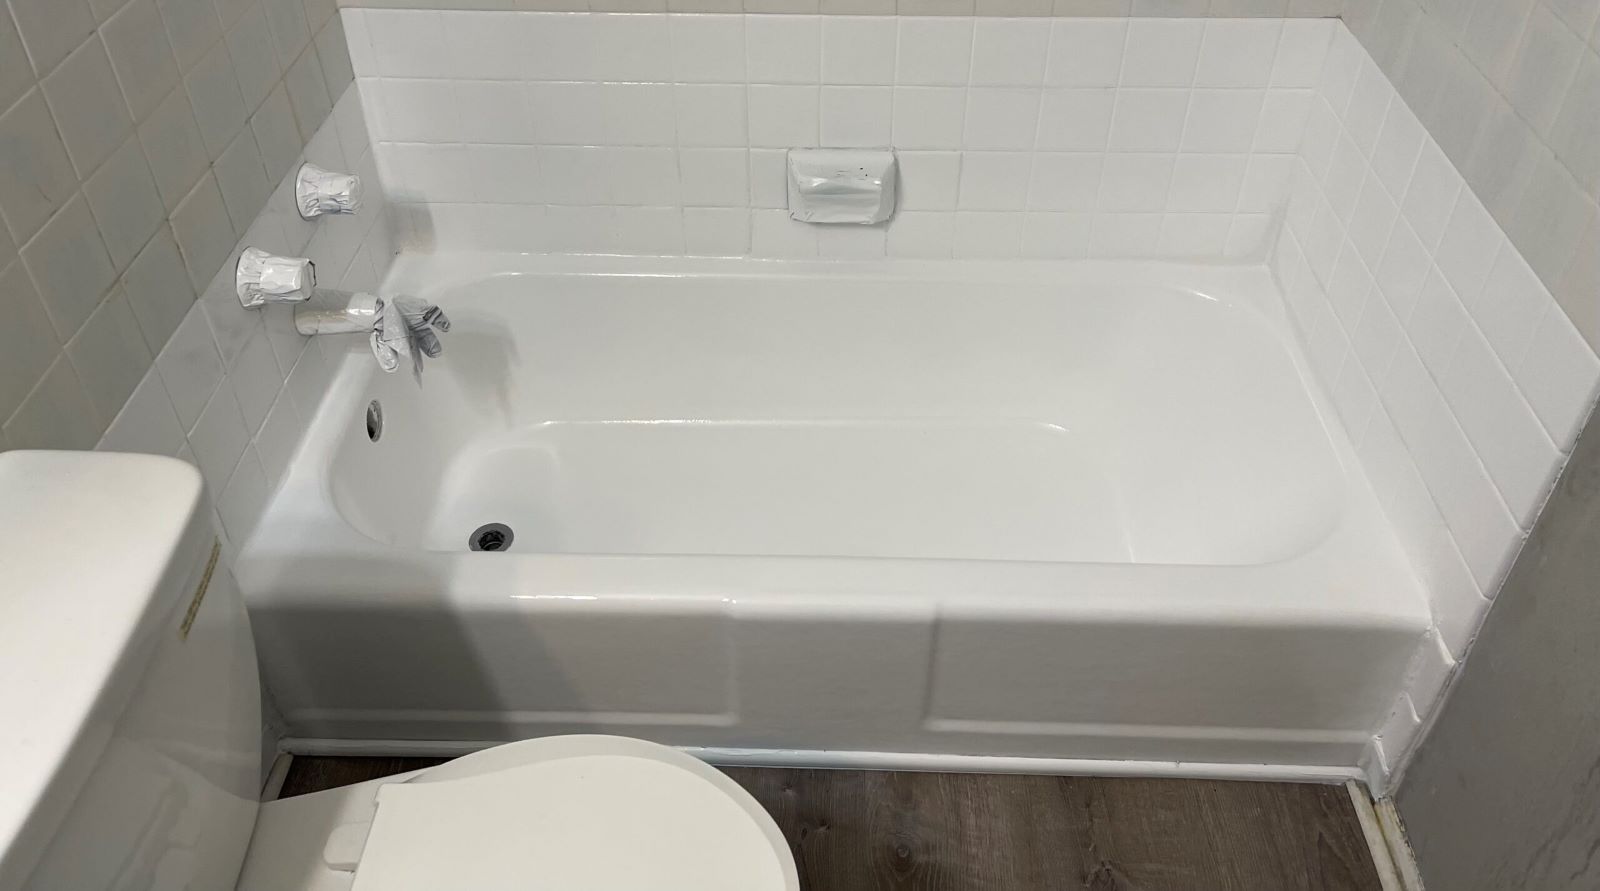 Low Cost Bathtub Refinishing in O'Fallon, MO | Affordable Tub Reglazing Near O'Fallon